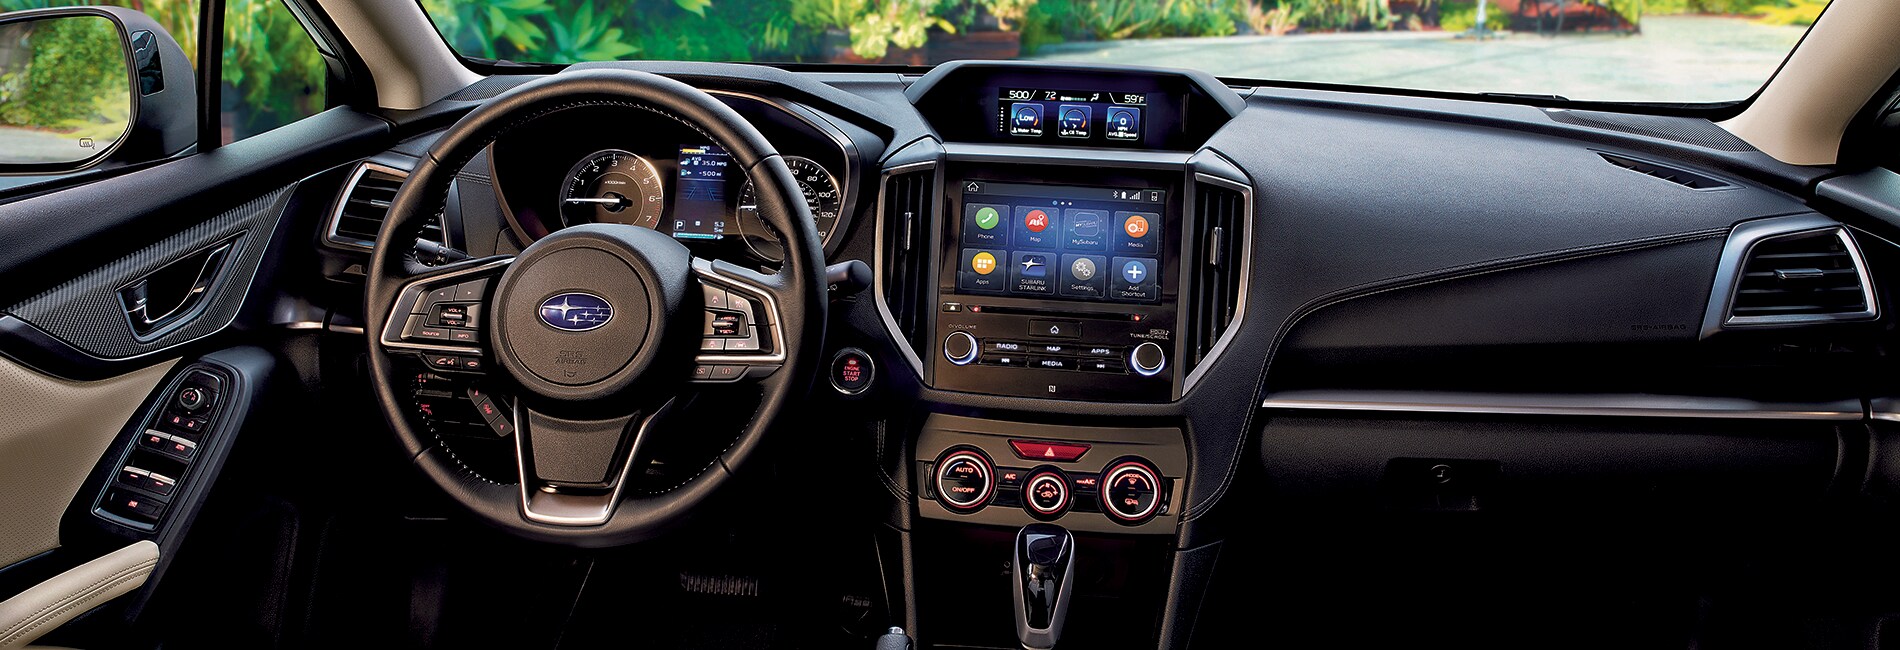 Subaru Impreza Interior Vehicle Features